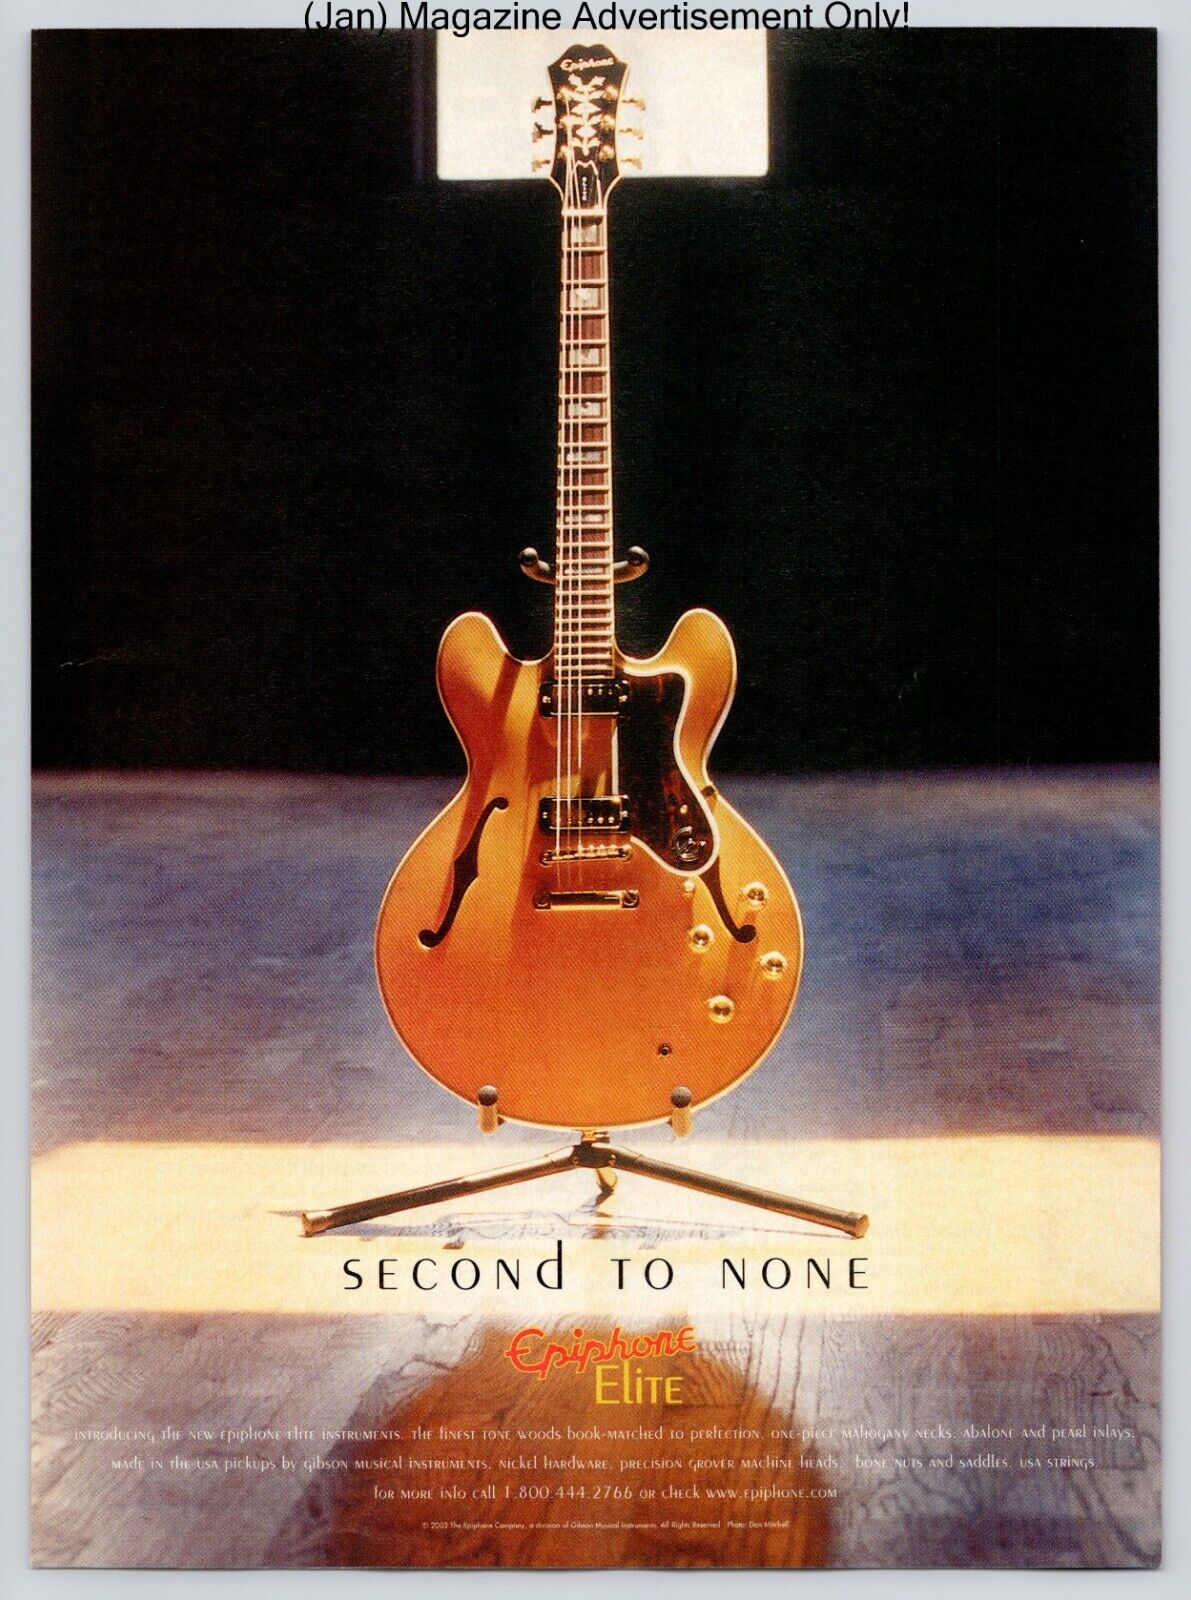 Epiphone Elite Guitars Promo 2003 Full Page Print Ad